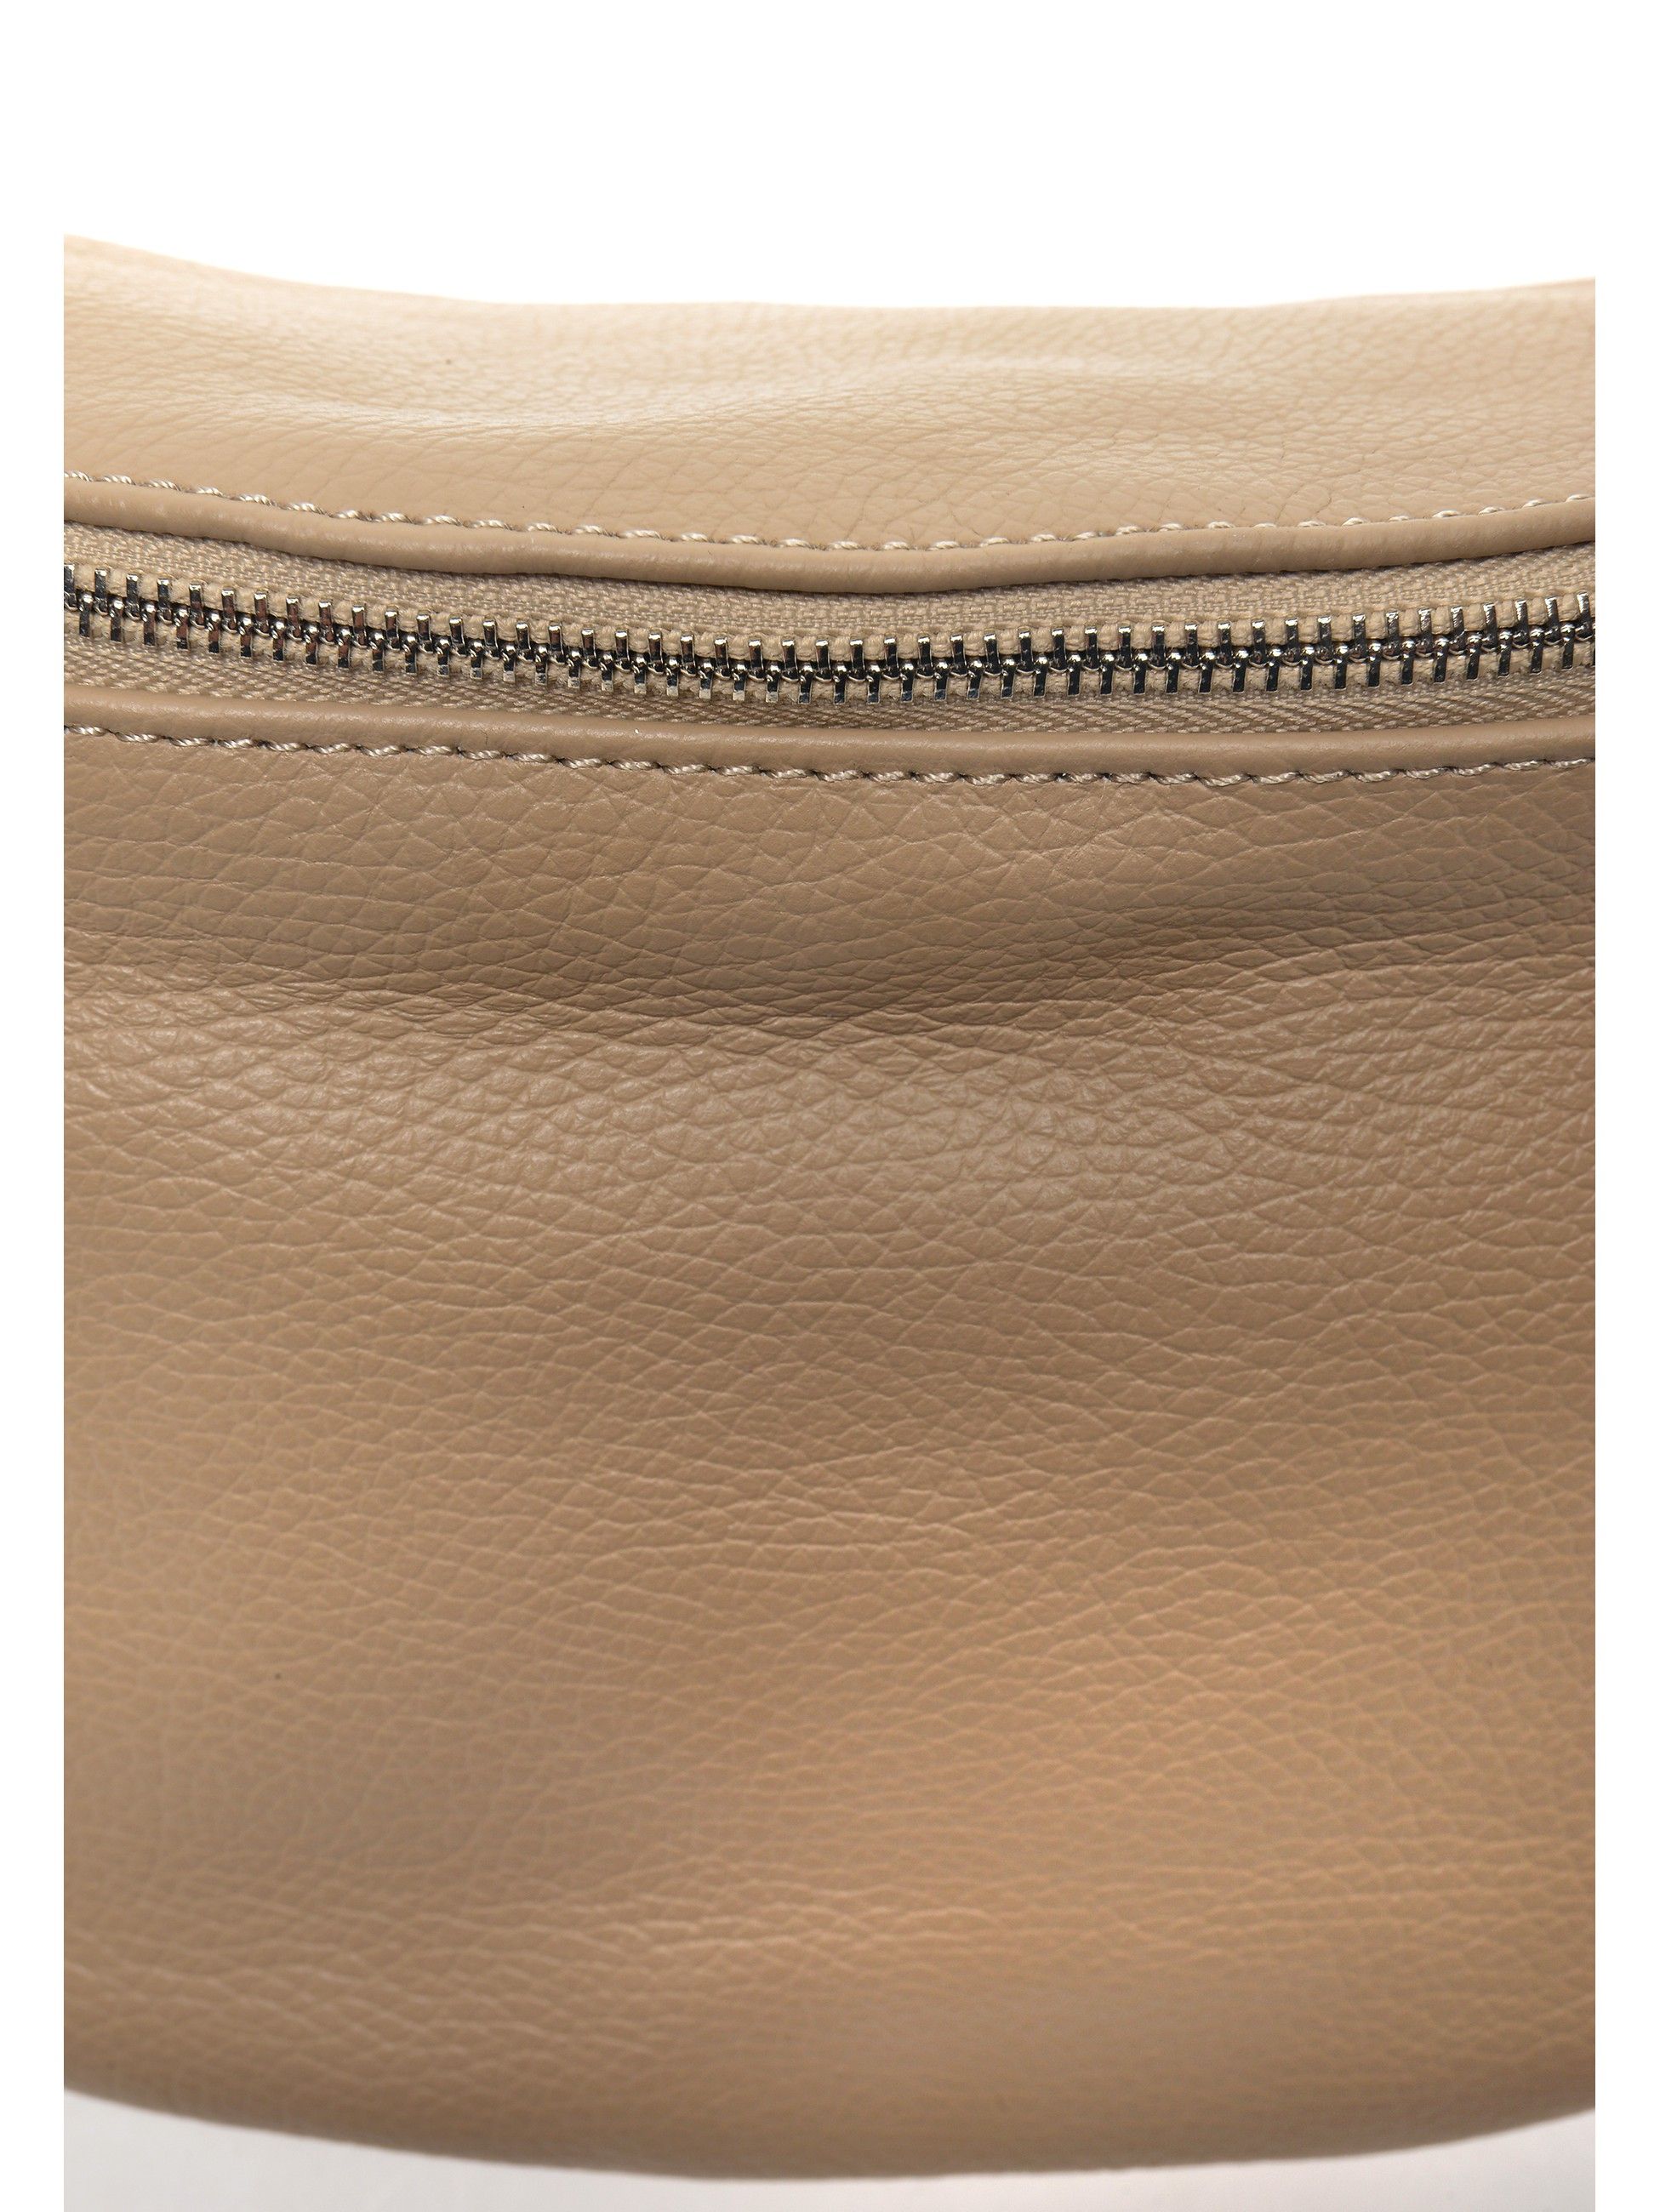 Waist Bag
100% cow leather
Front zip closure
Inner zipped compartment
Dimensions (L): 19x34 x / cm
Handle: /
Shoulder strap: 97 cm adjustable